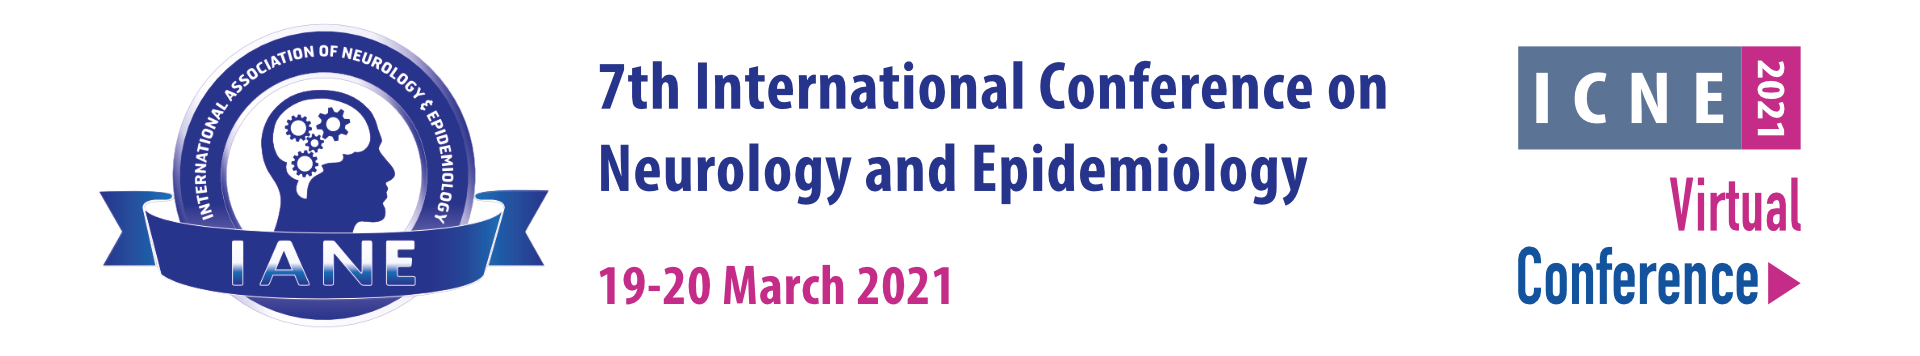 International Virtual Conference on Neurology and Epidemiology 